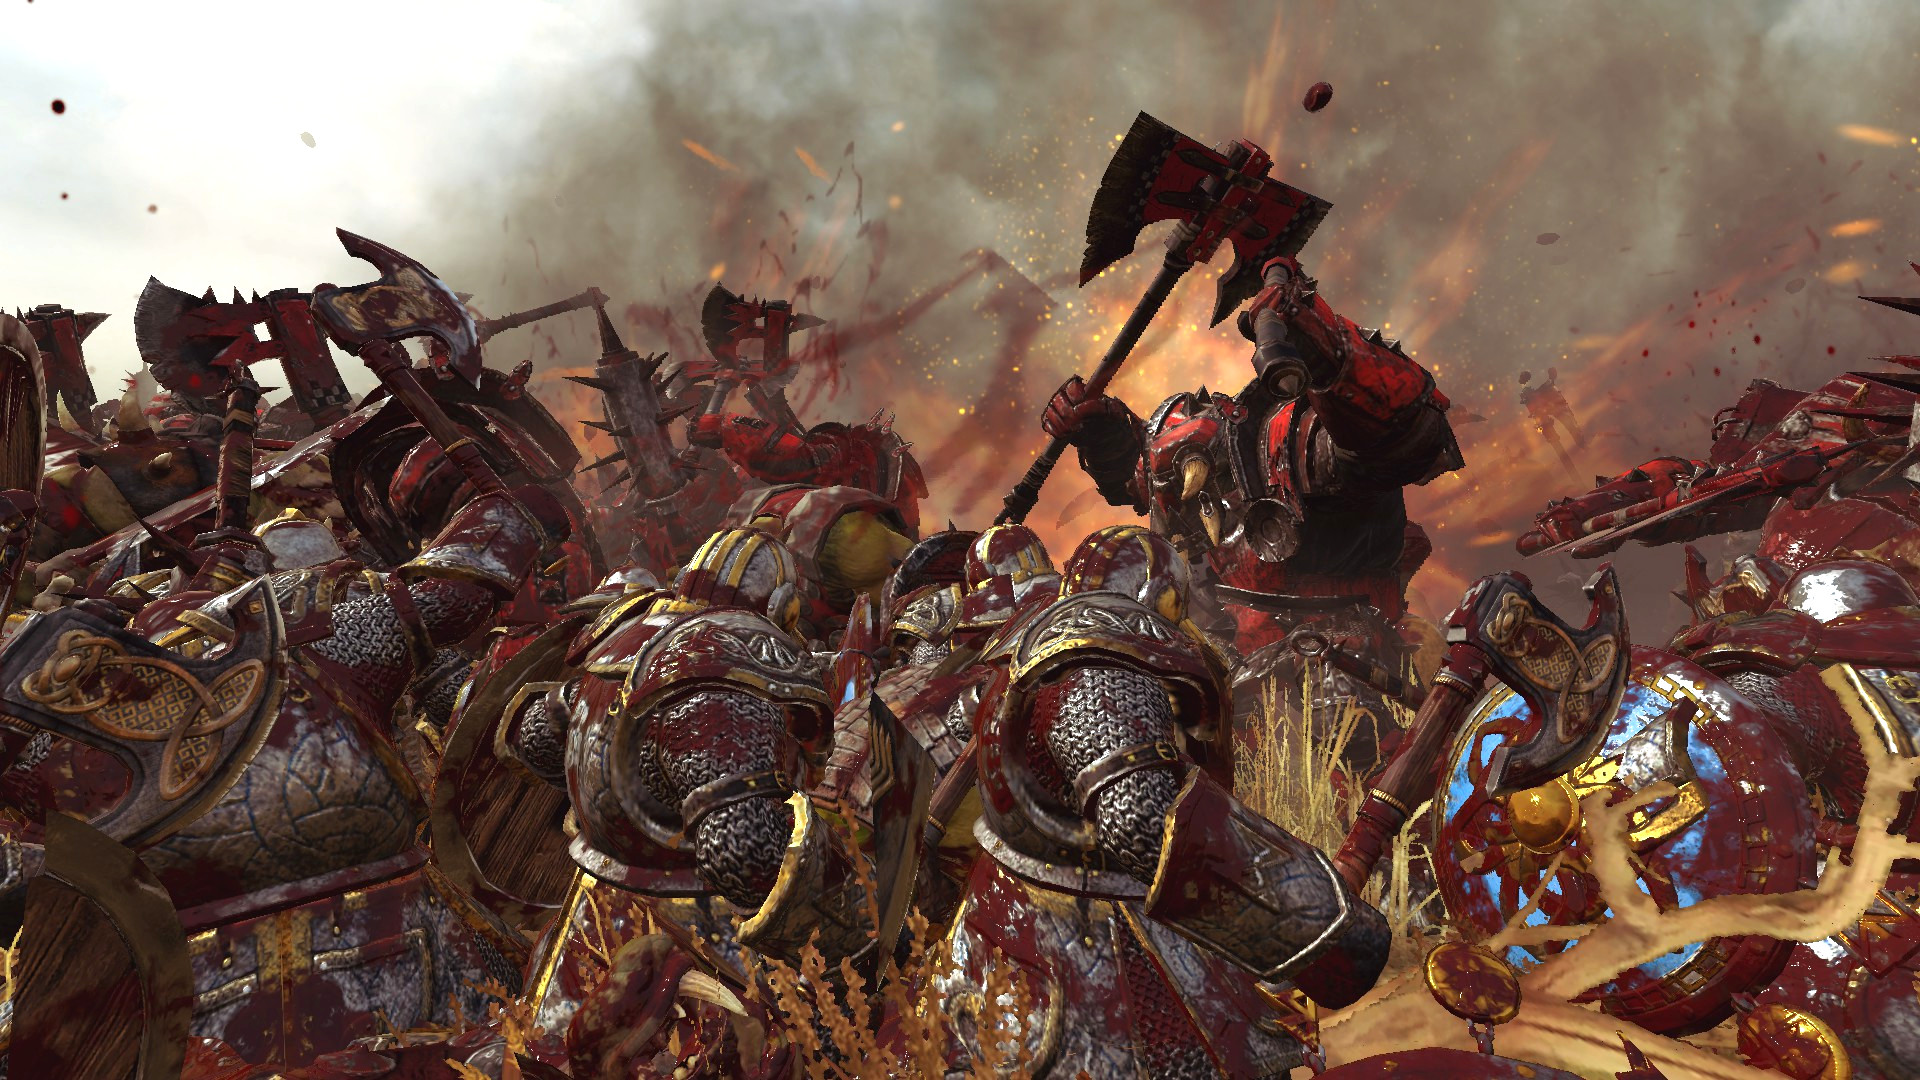 Steam Workshop::Total War Battle Mod